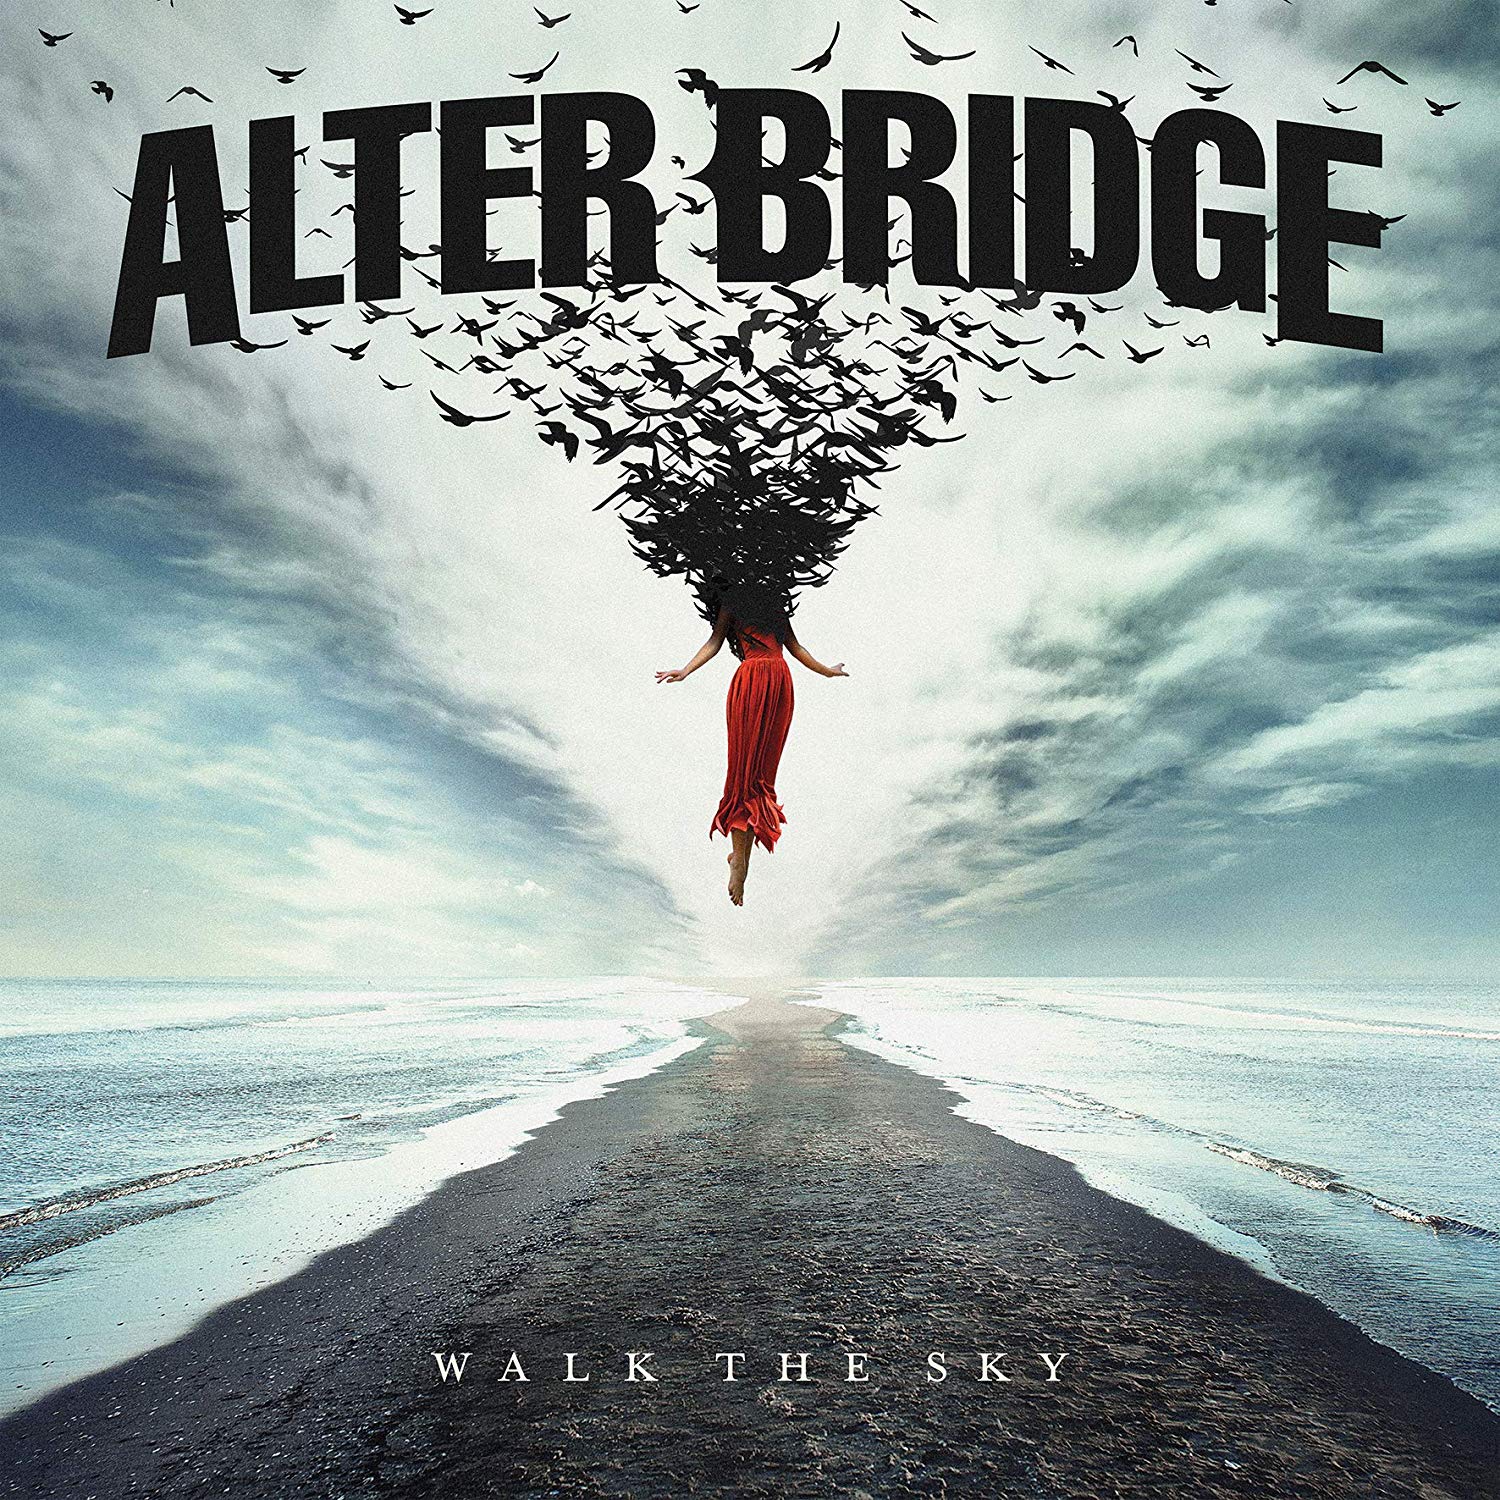 Alter Bridge's Walk The Sky